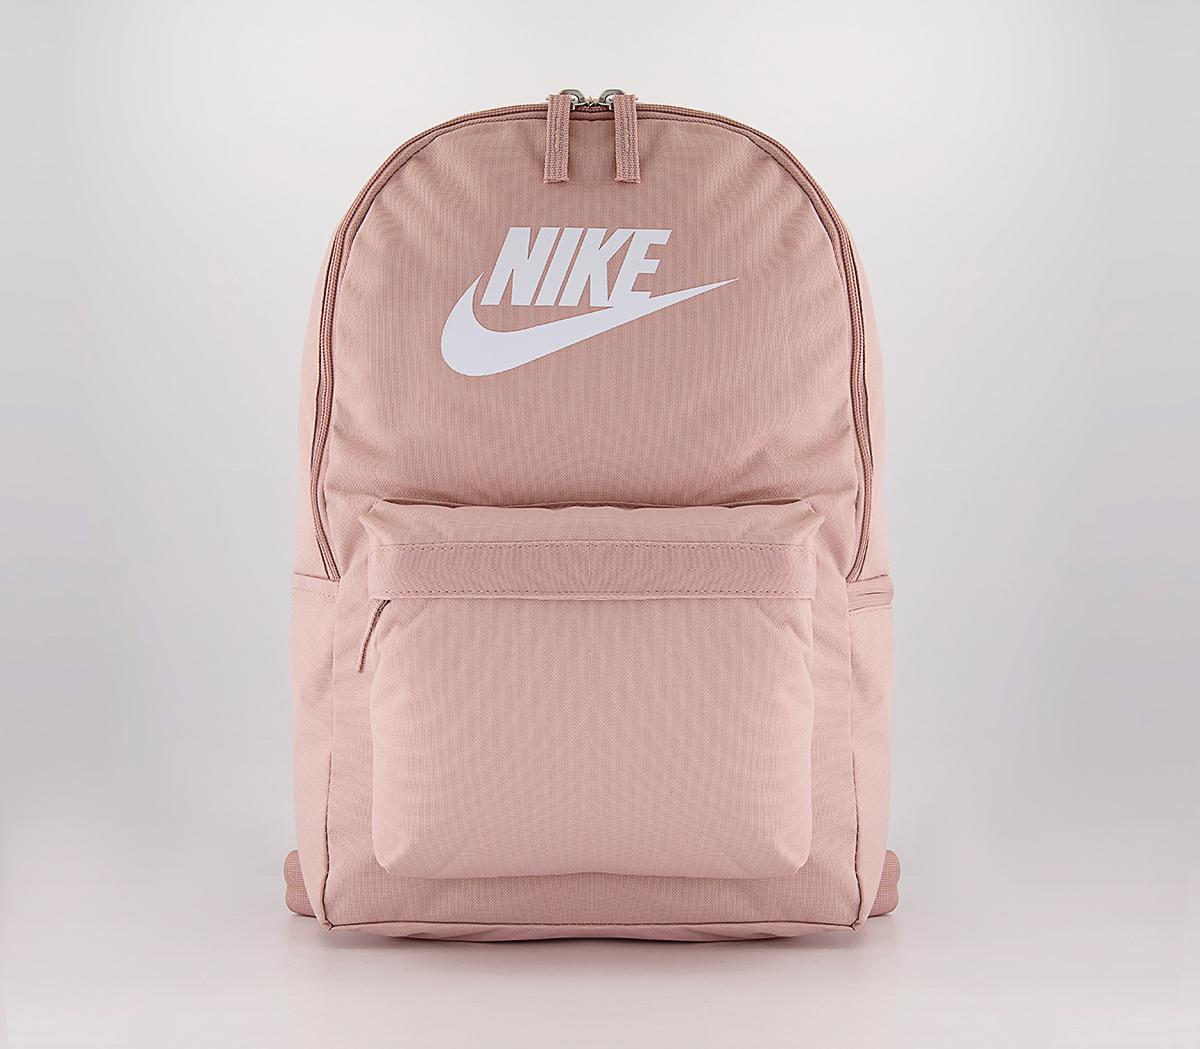 Nike | Bags | Nike Orange And Black Tote Bag | Poshmark